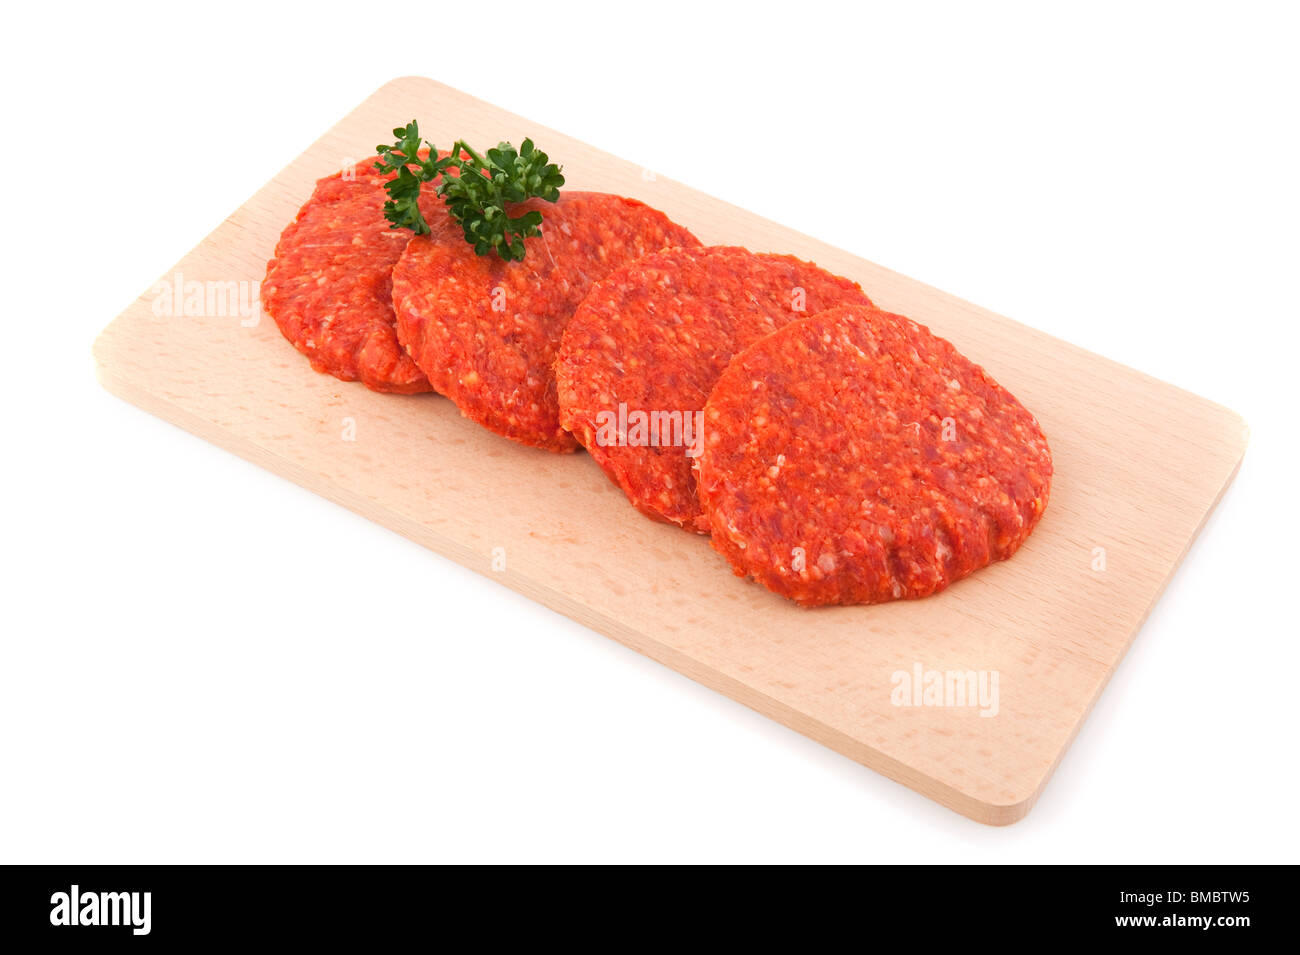 Raw hamburgers with parsley on wooden tray Stock Photo